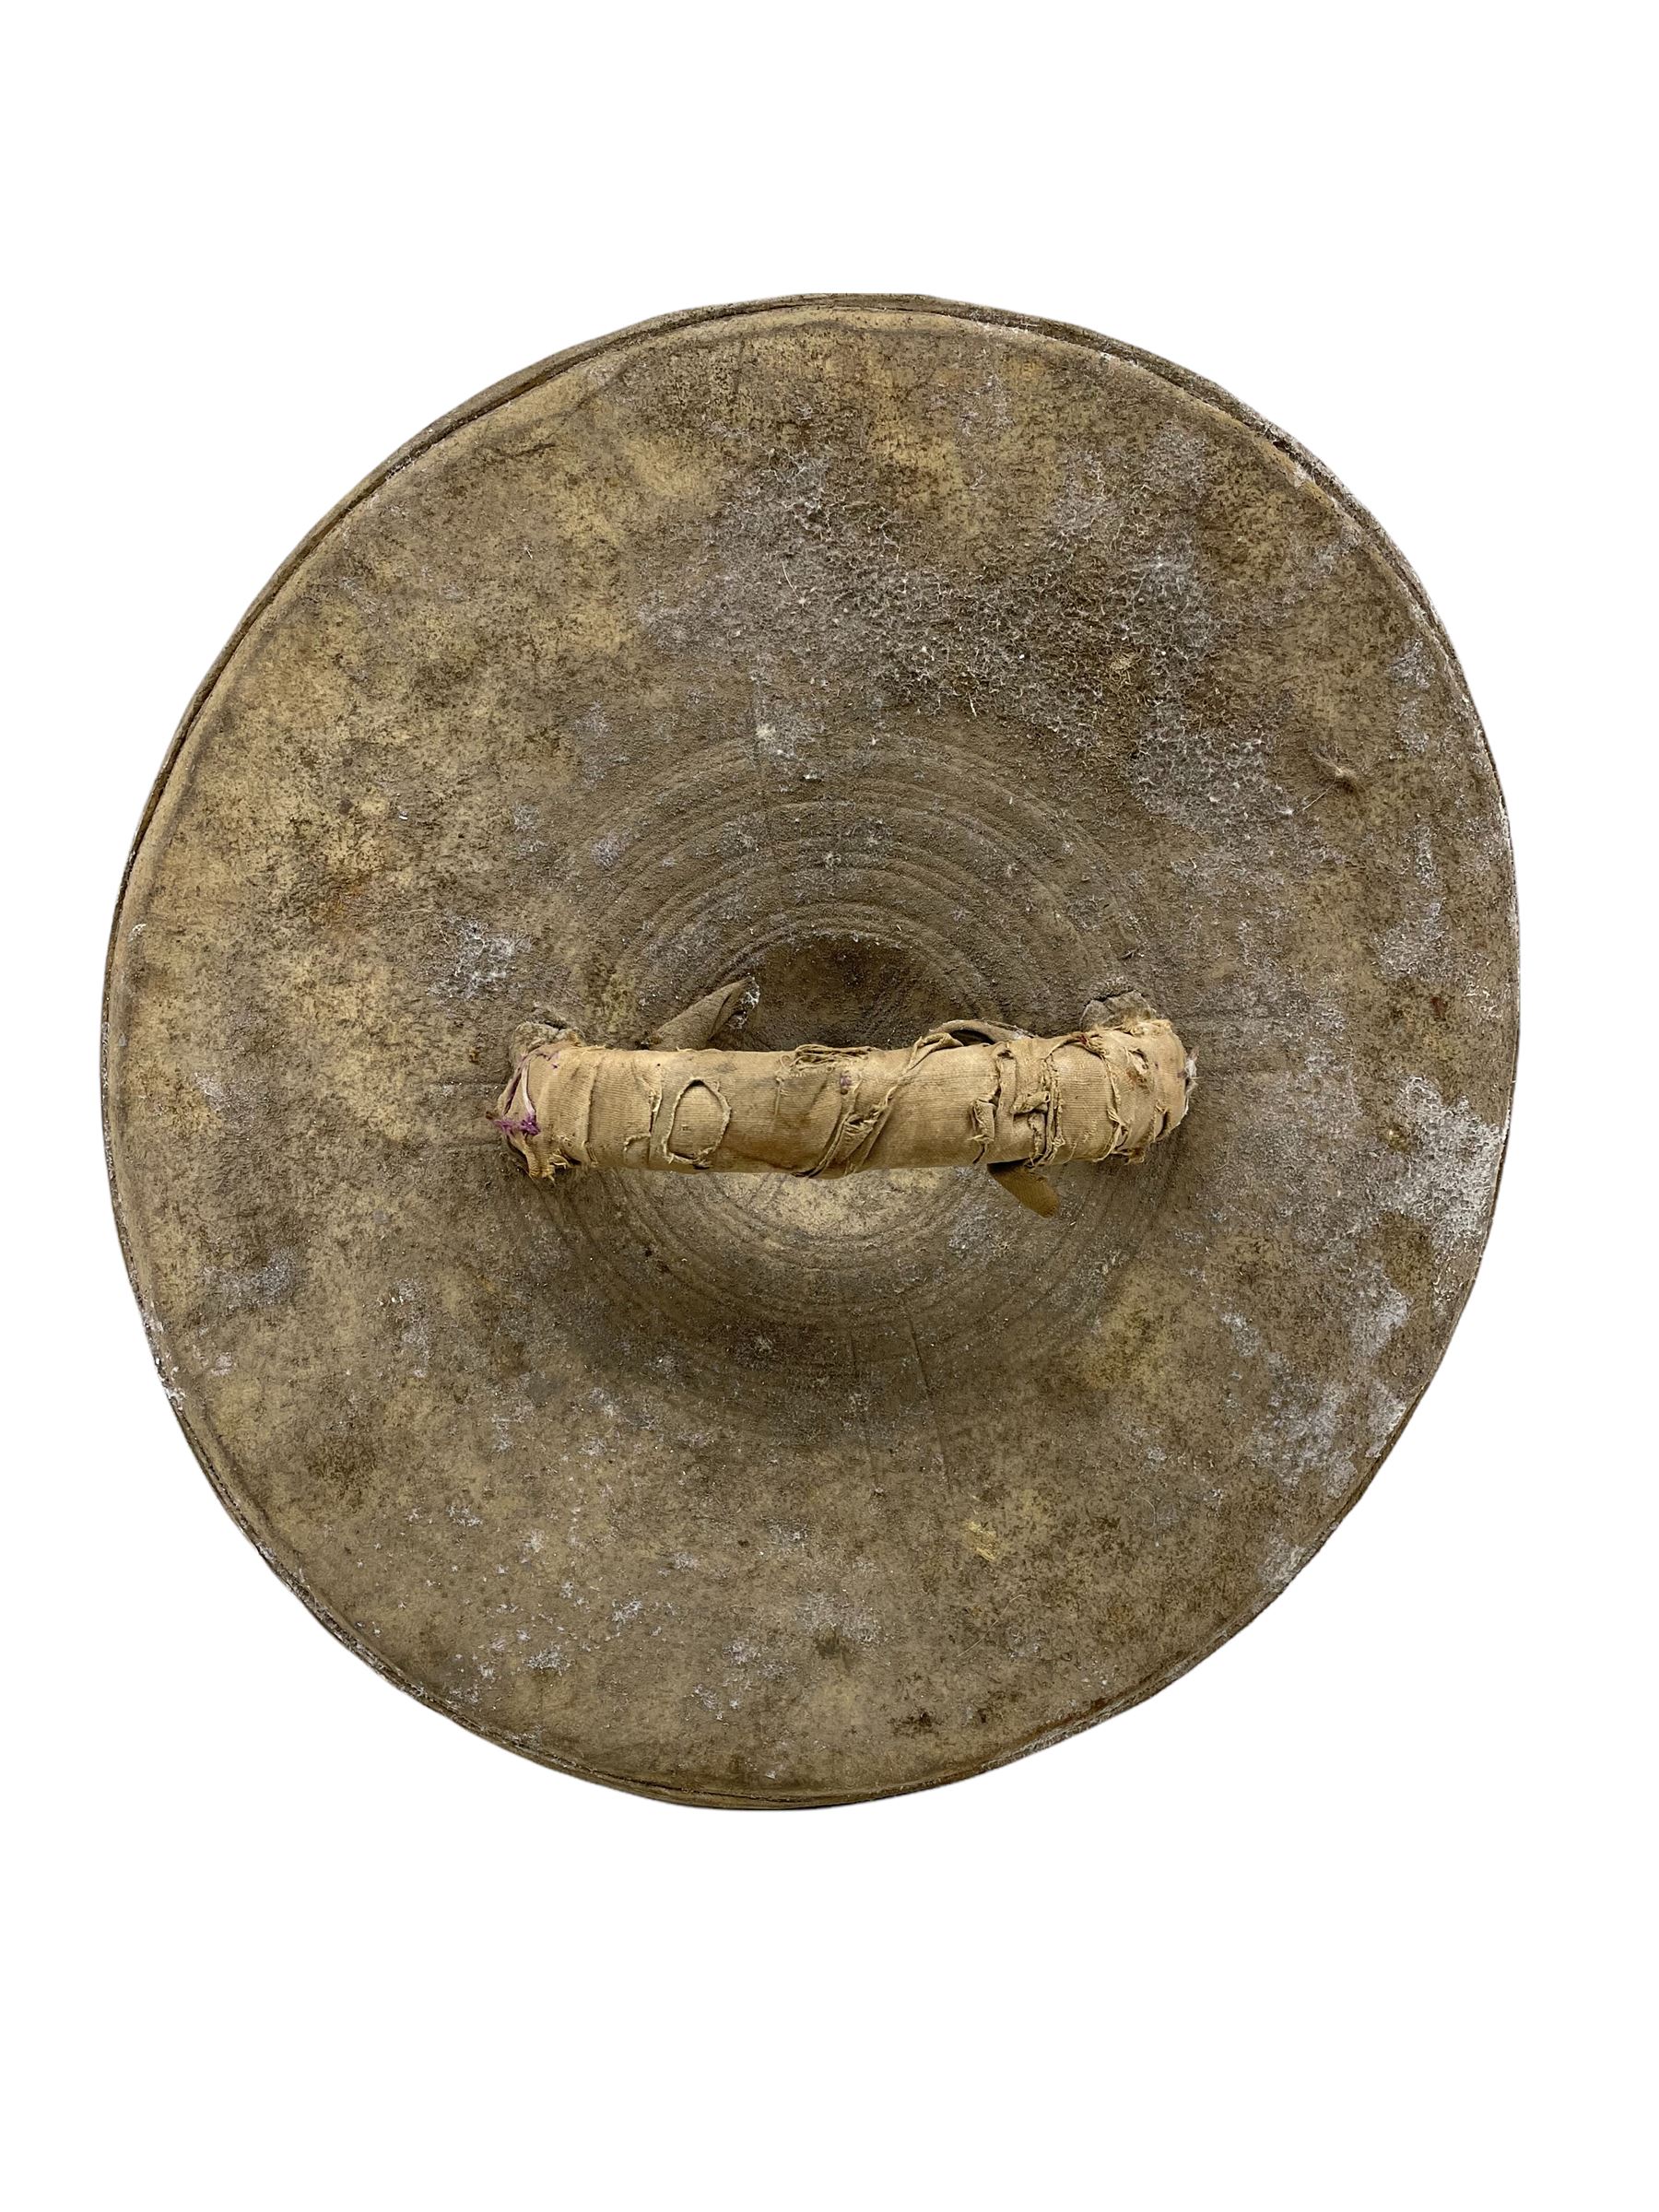 Somali Hippopotamus hide circular shield with concentric design D36cm - Image 2 of 2